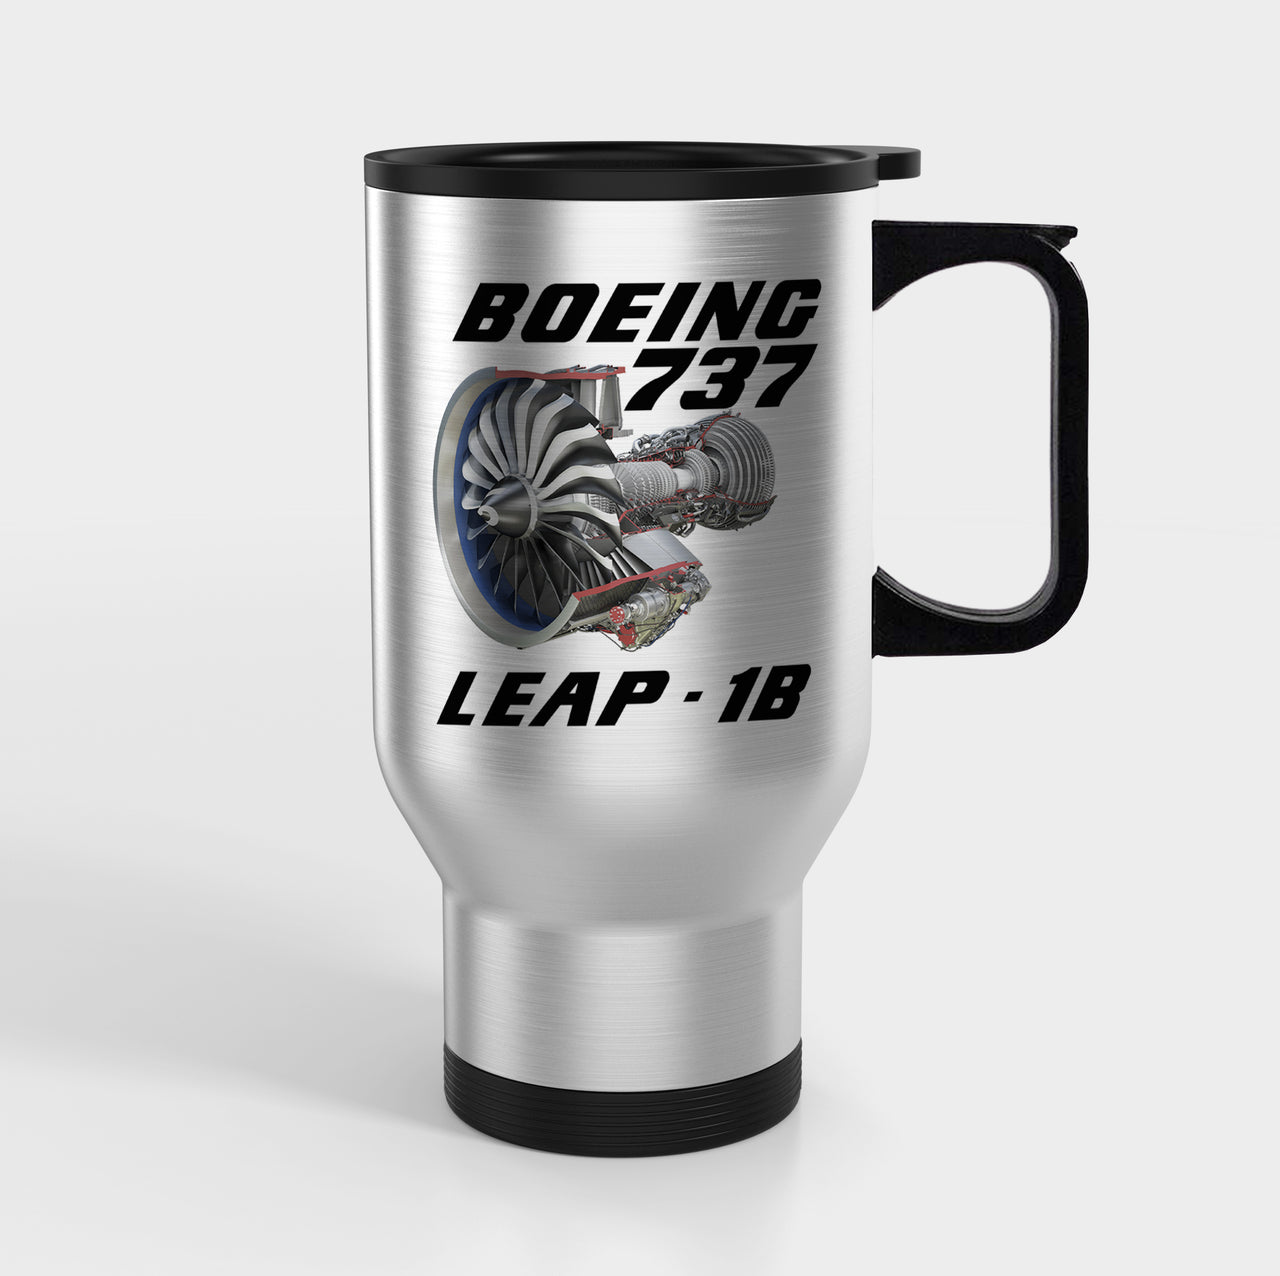 Boeing 737 & Leap 1B Engine Designed Travel Mugs (With Holder)